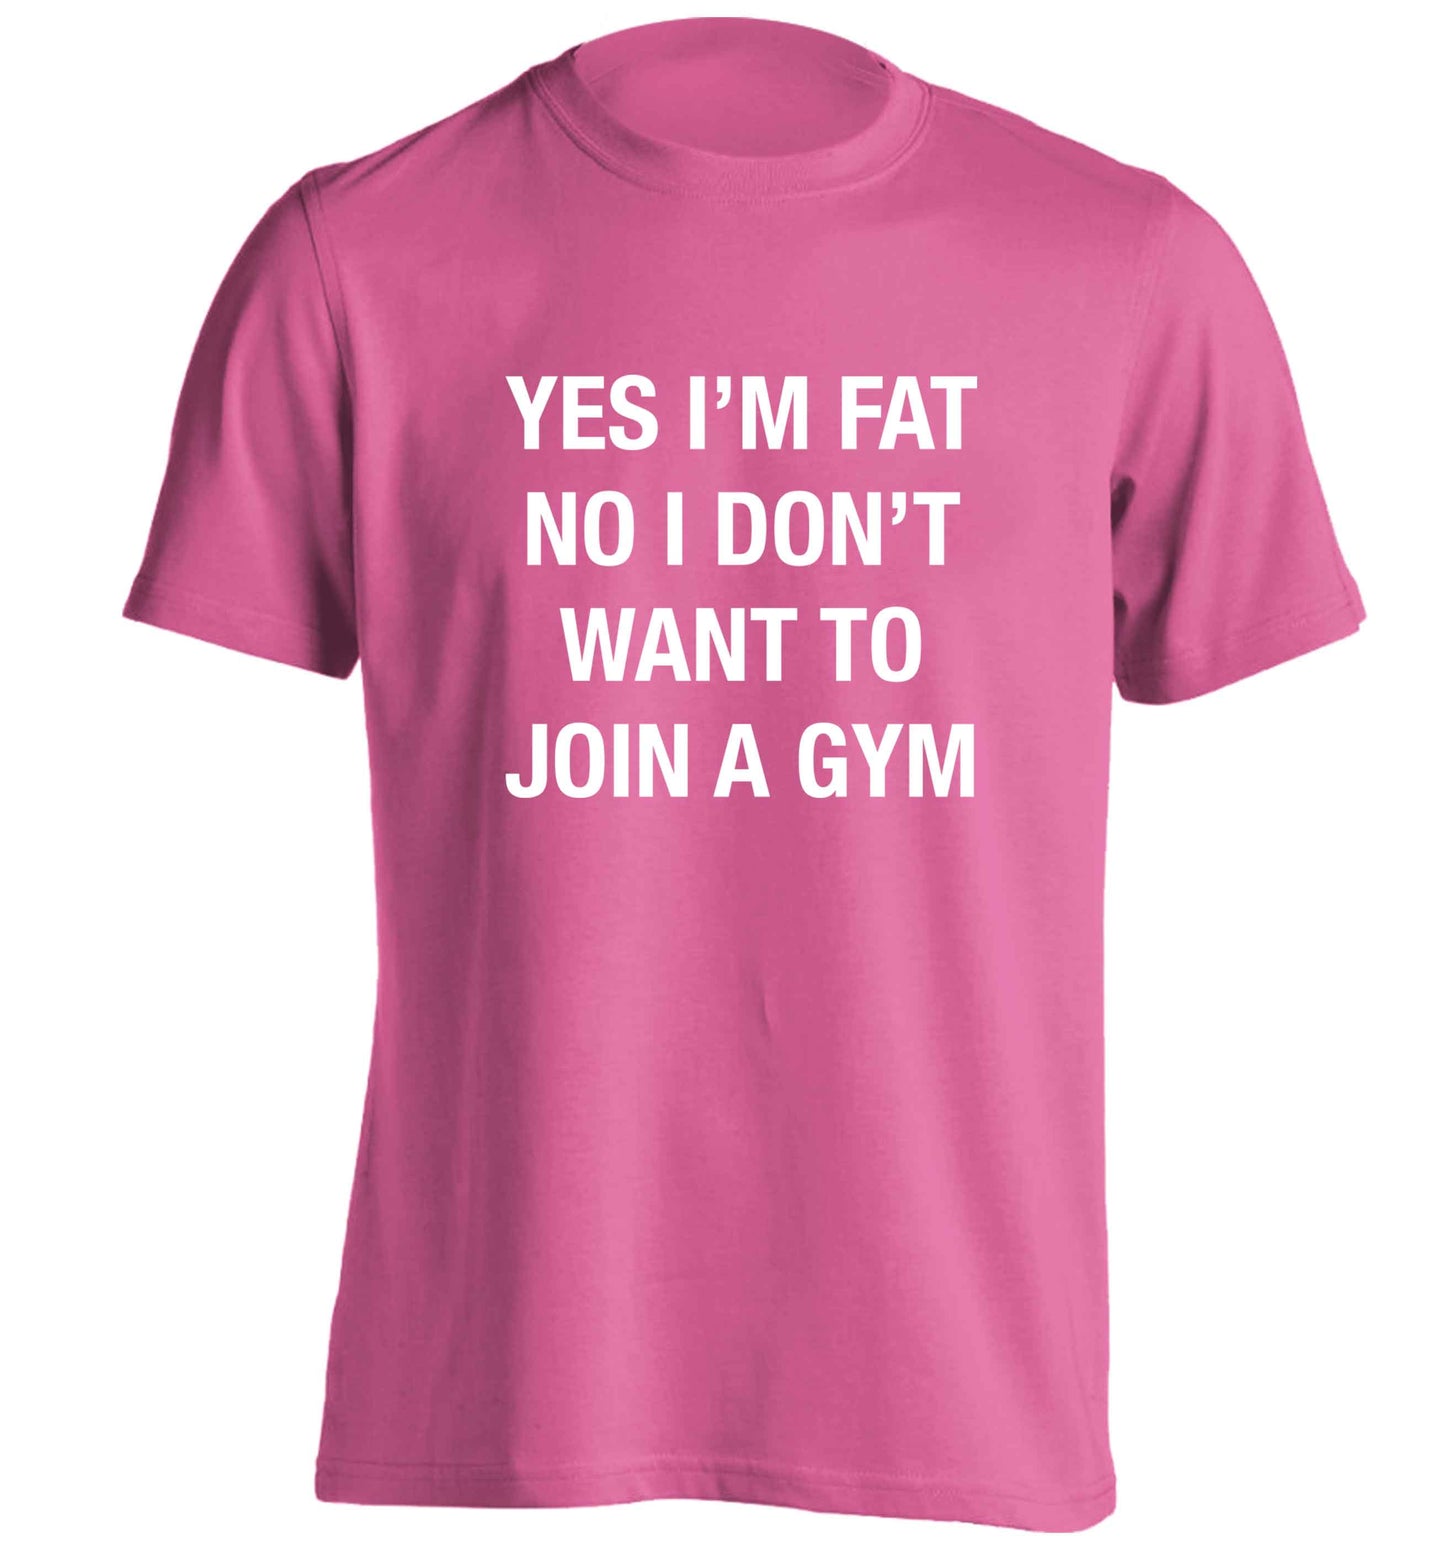 Yes I'm fat, no I don't want to go to the gym adults unisex pink Tshirt 2XL